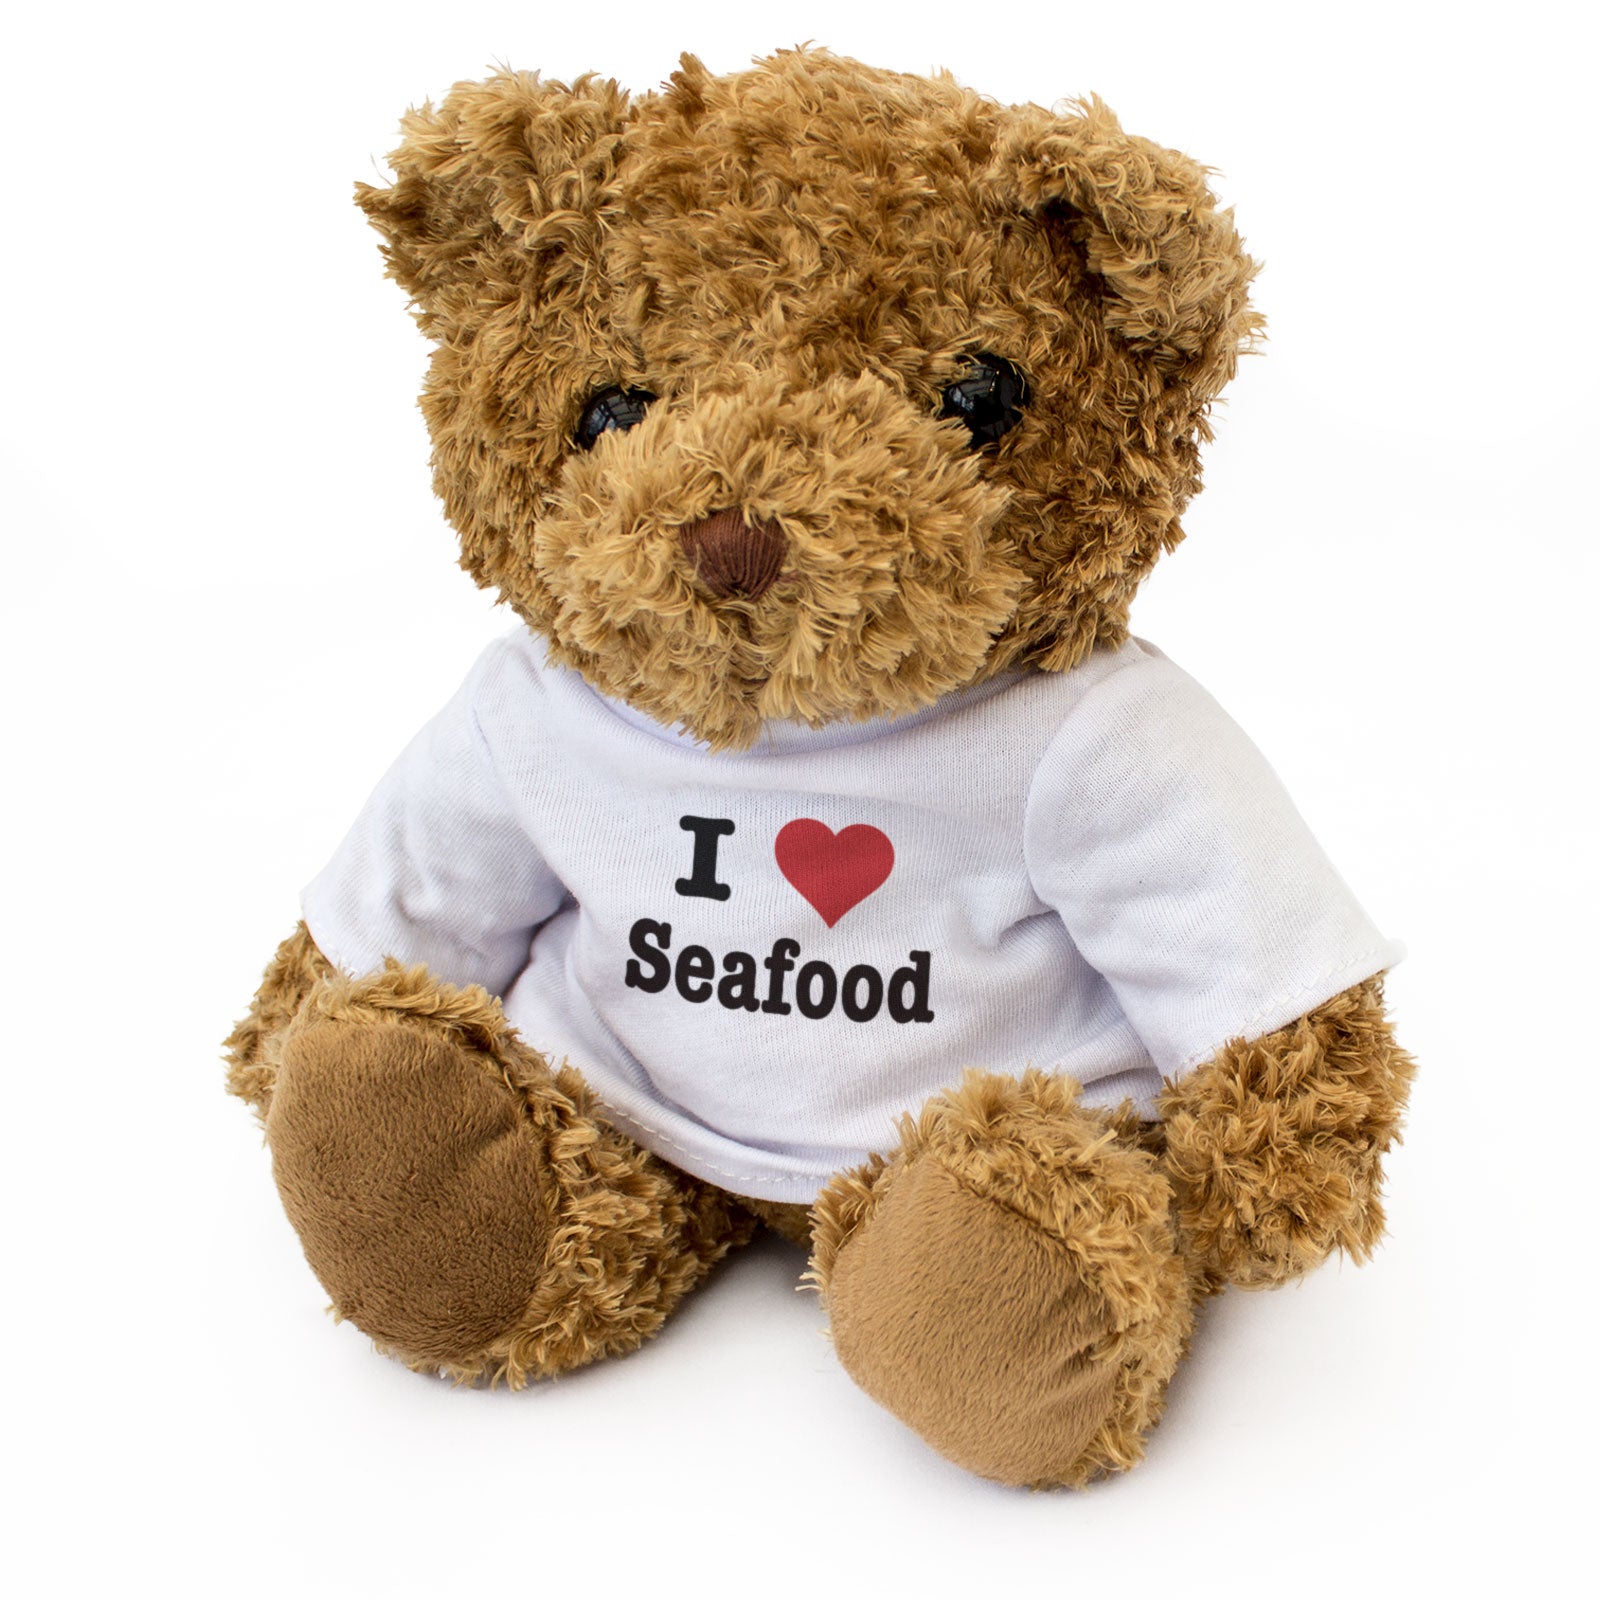 I Love Seafood - Teddy Bear